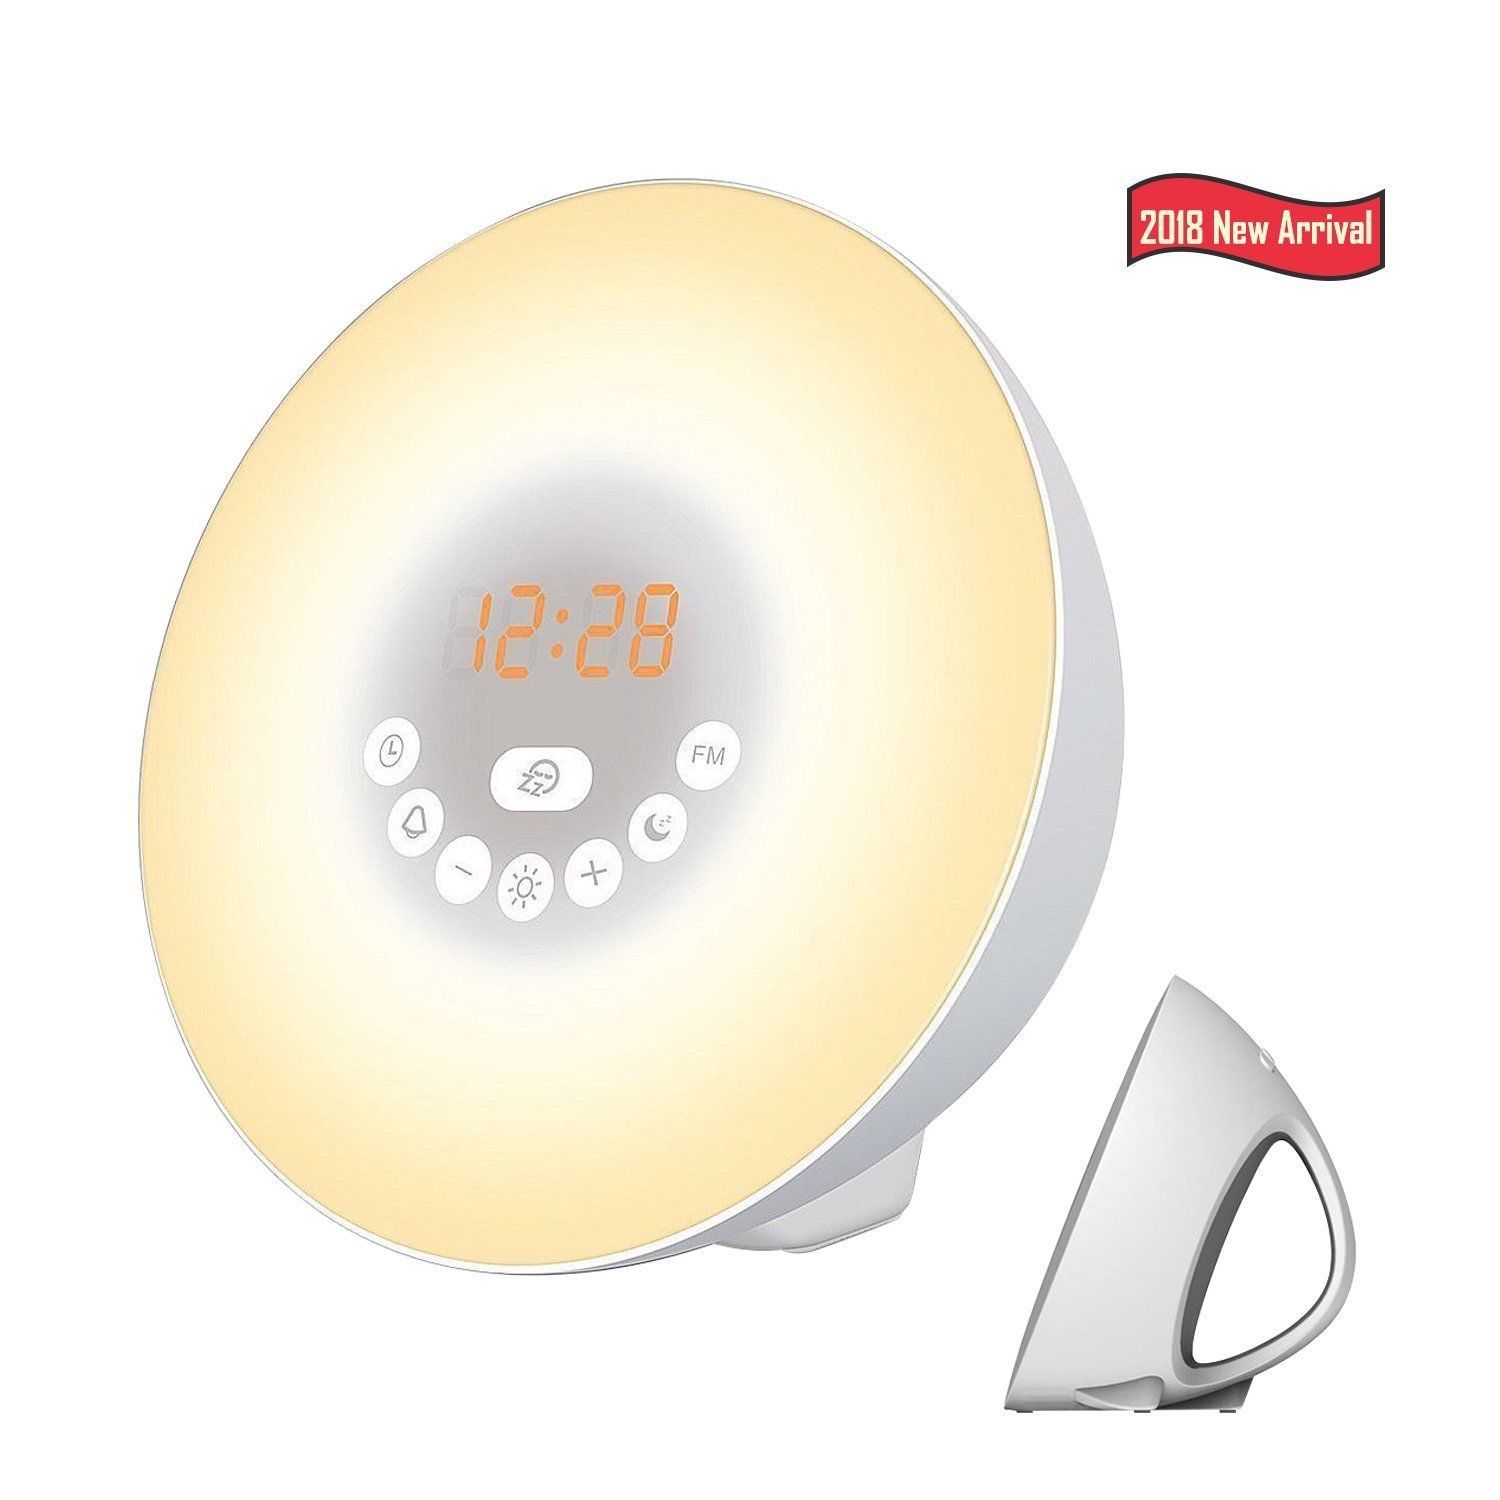 Sunrise Alarm Clock, Digital LED Wake Up Light Clock by Vodool - 7 Color Switchs